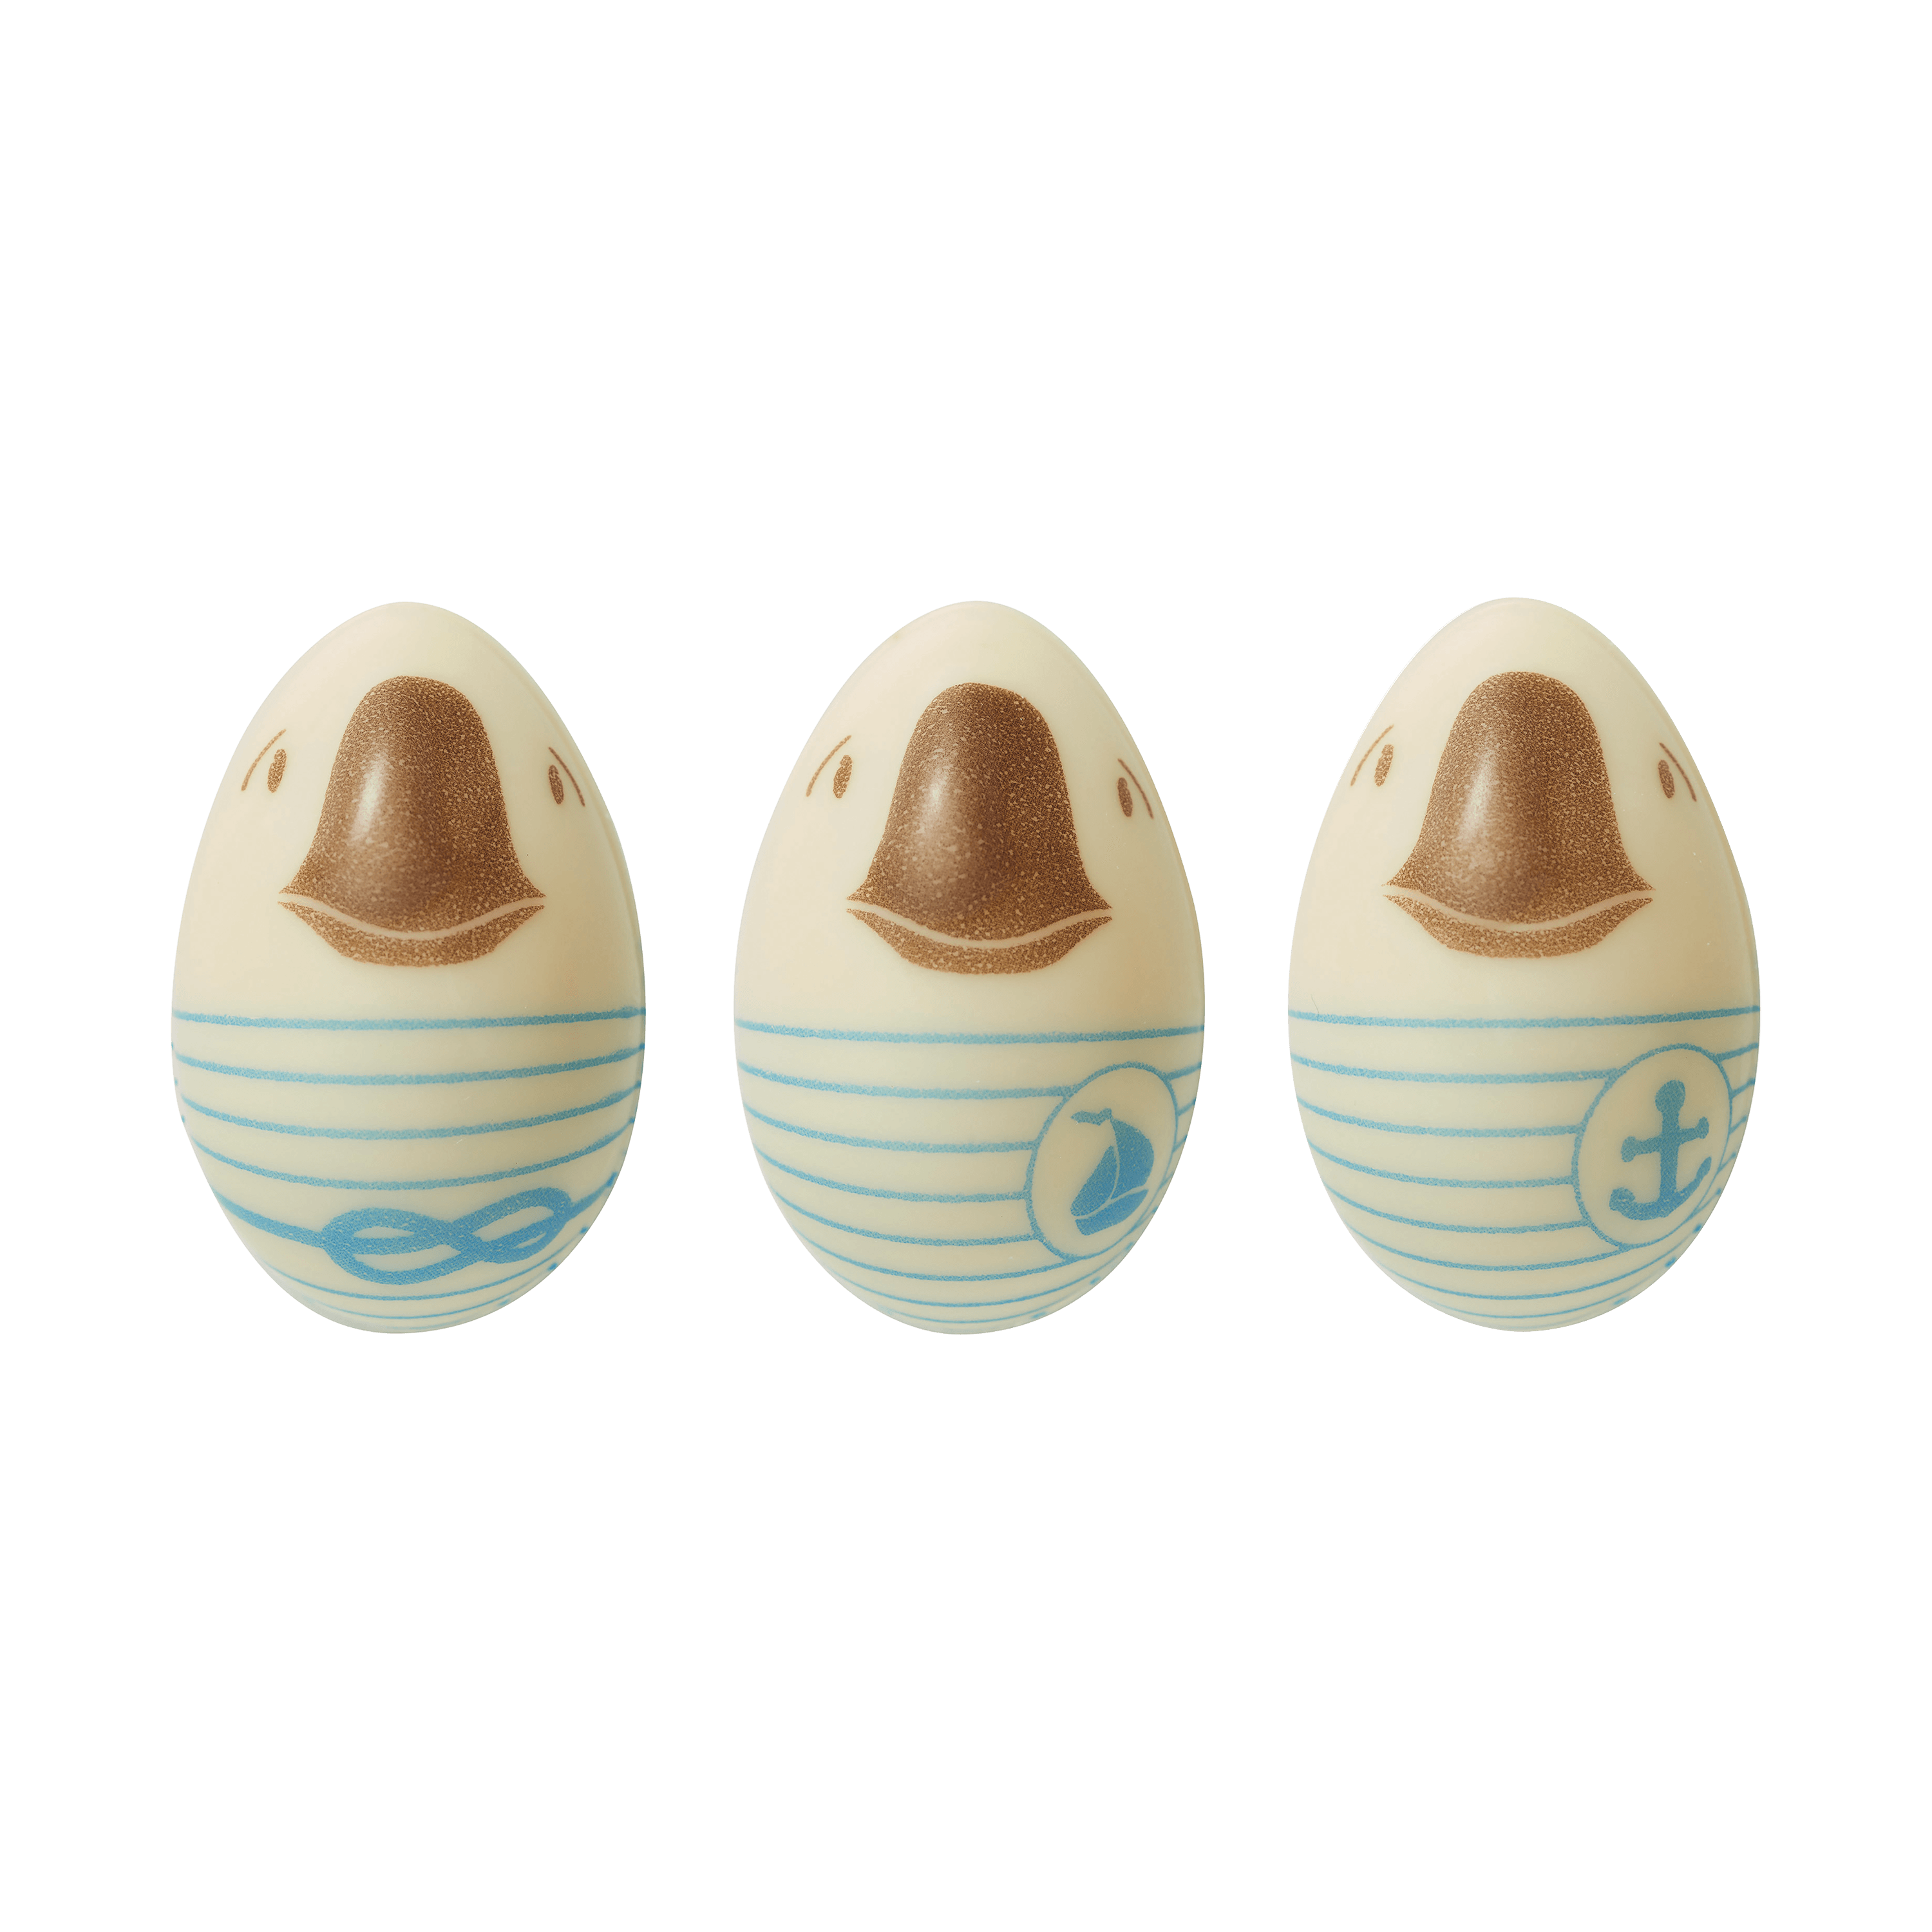 Easter Sparrow Eggs - 3 models - Savory Gourmet